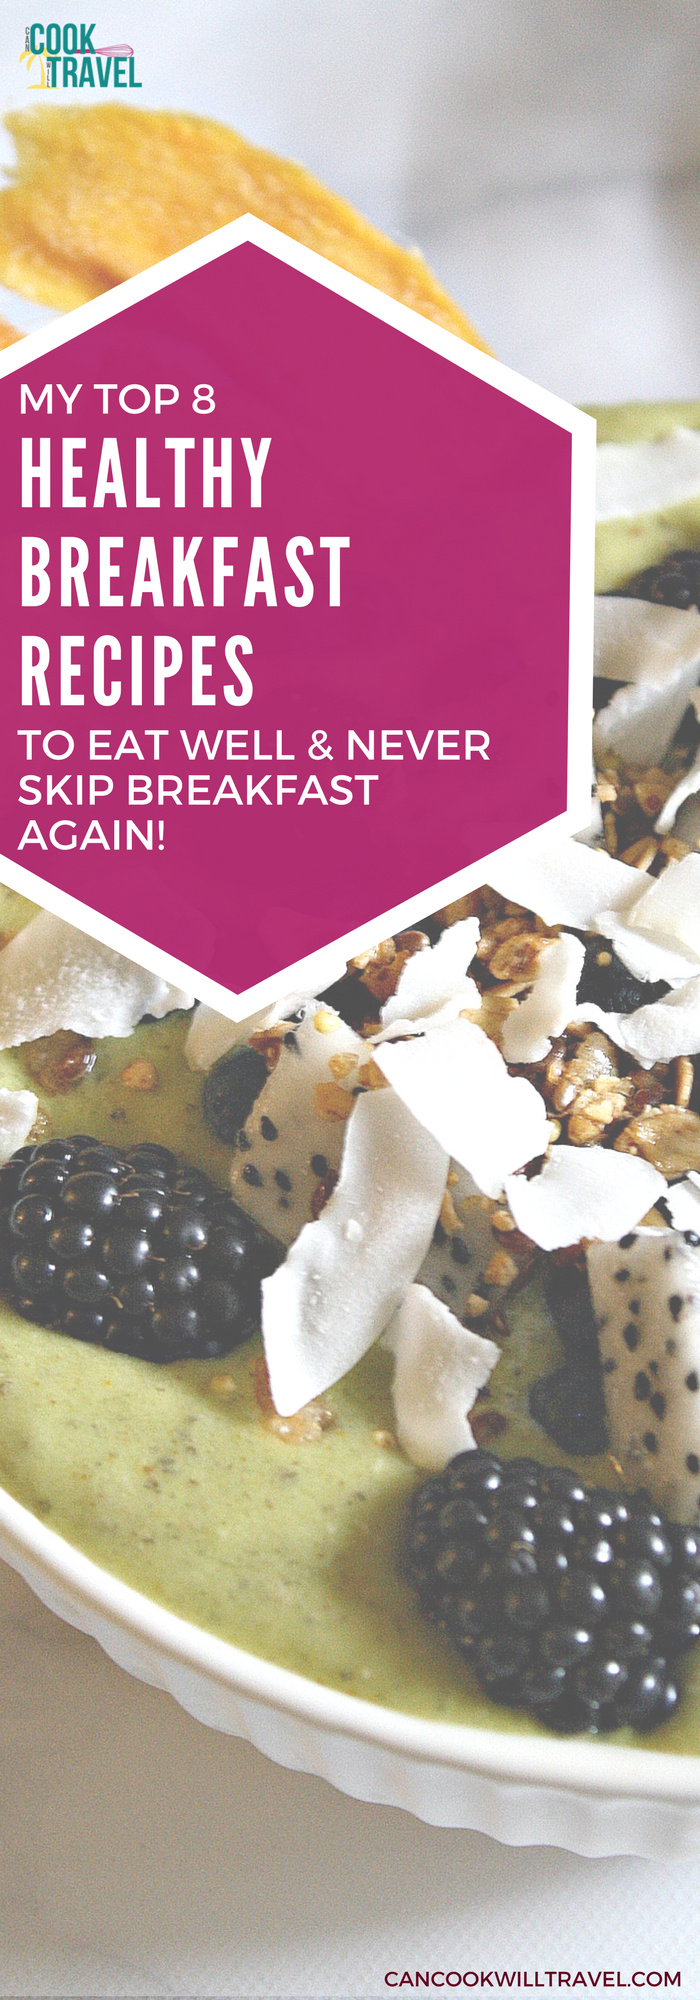 Top 8 Healthy Breakfast Recipes_Tall